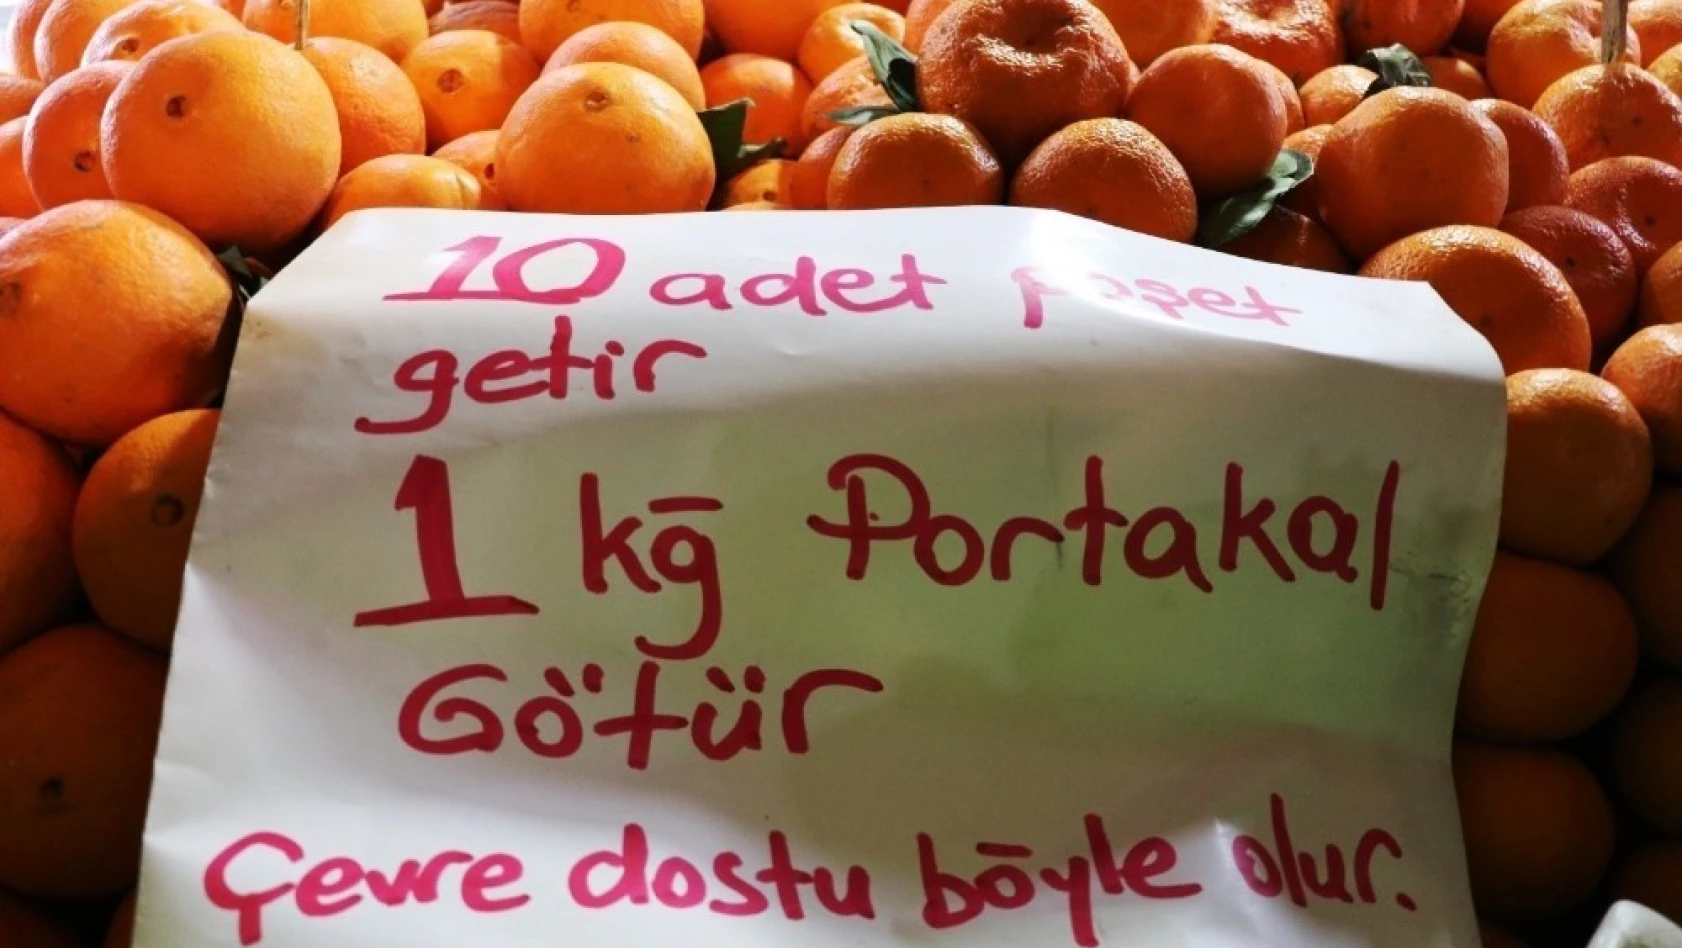 10 poşet getirene 1 kilo portakal